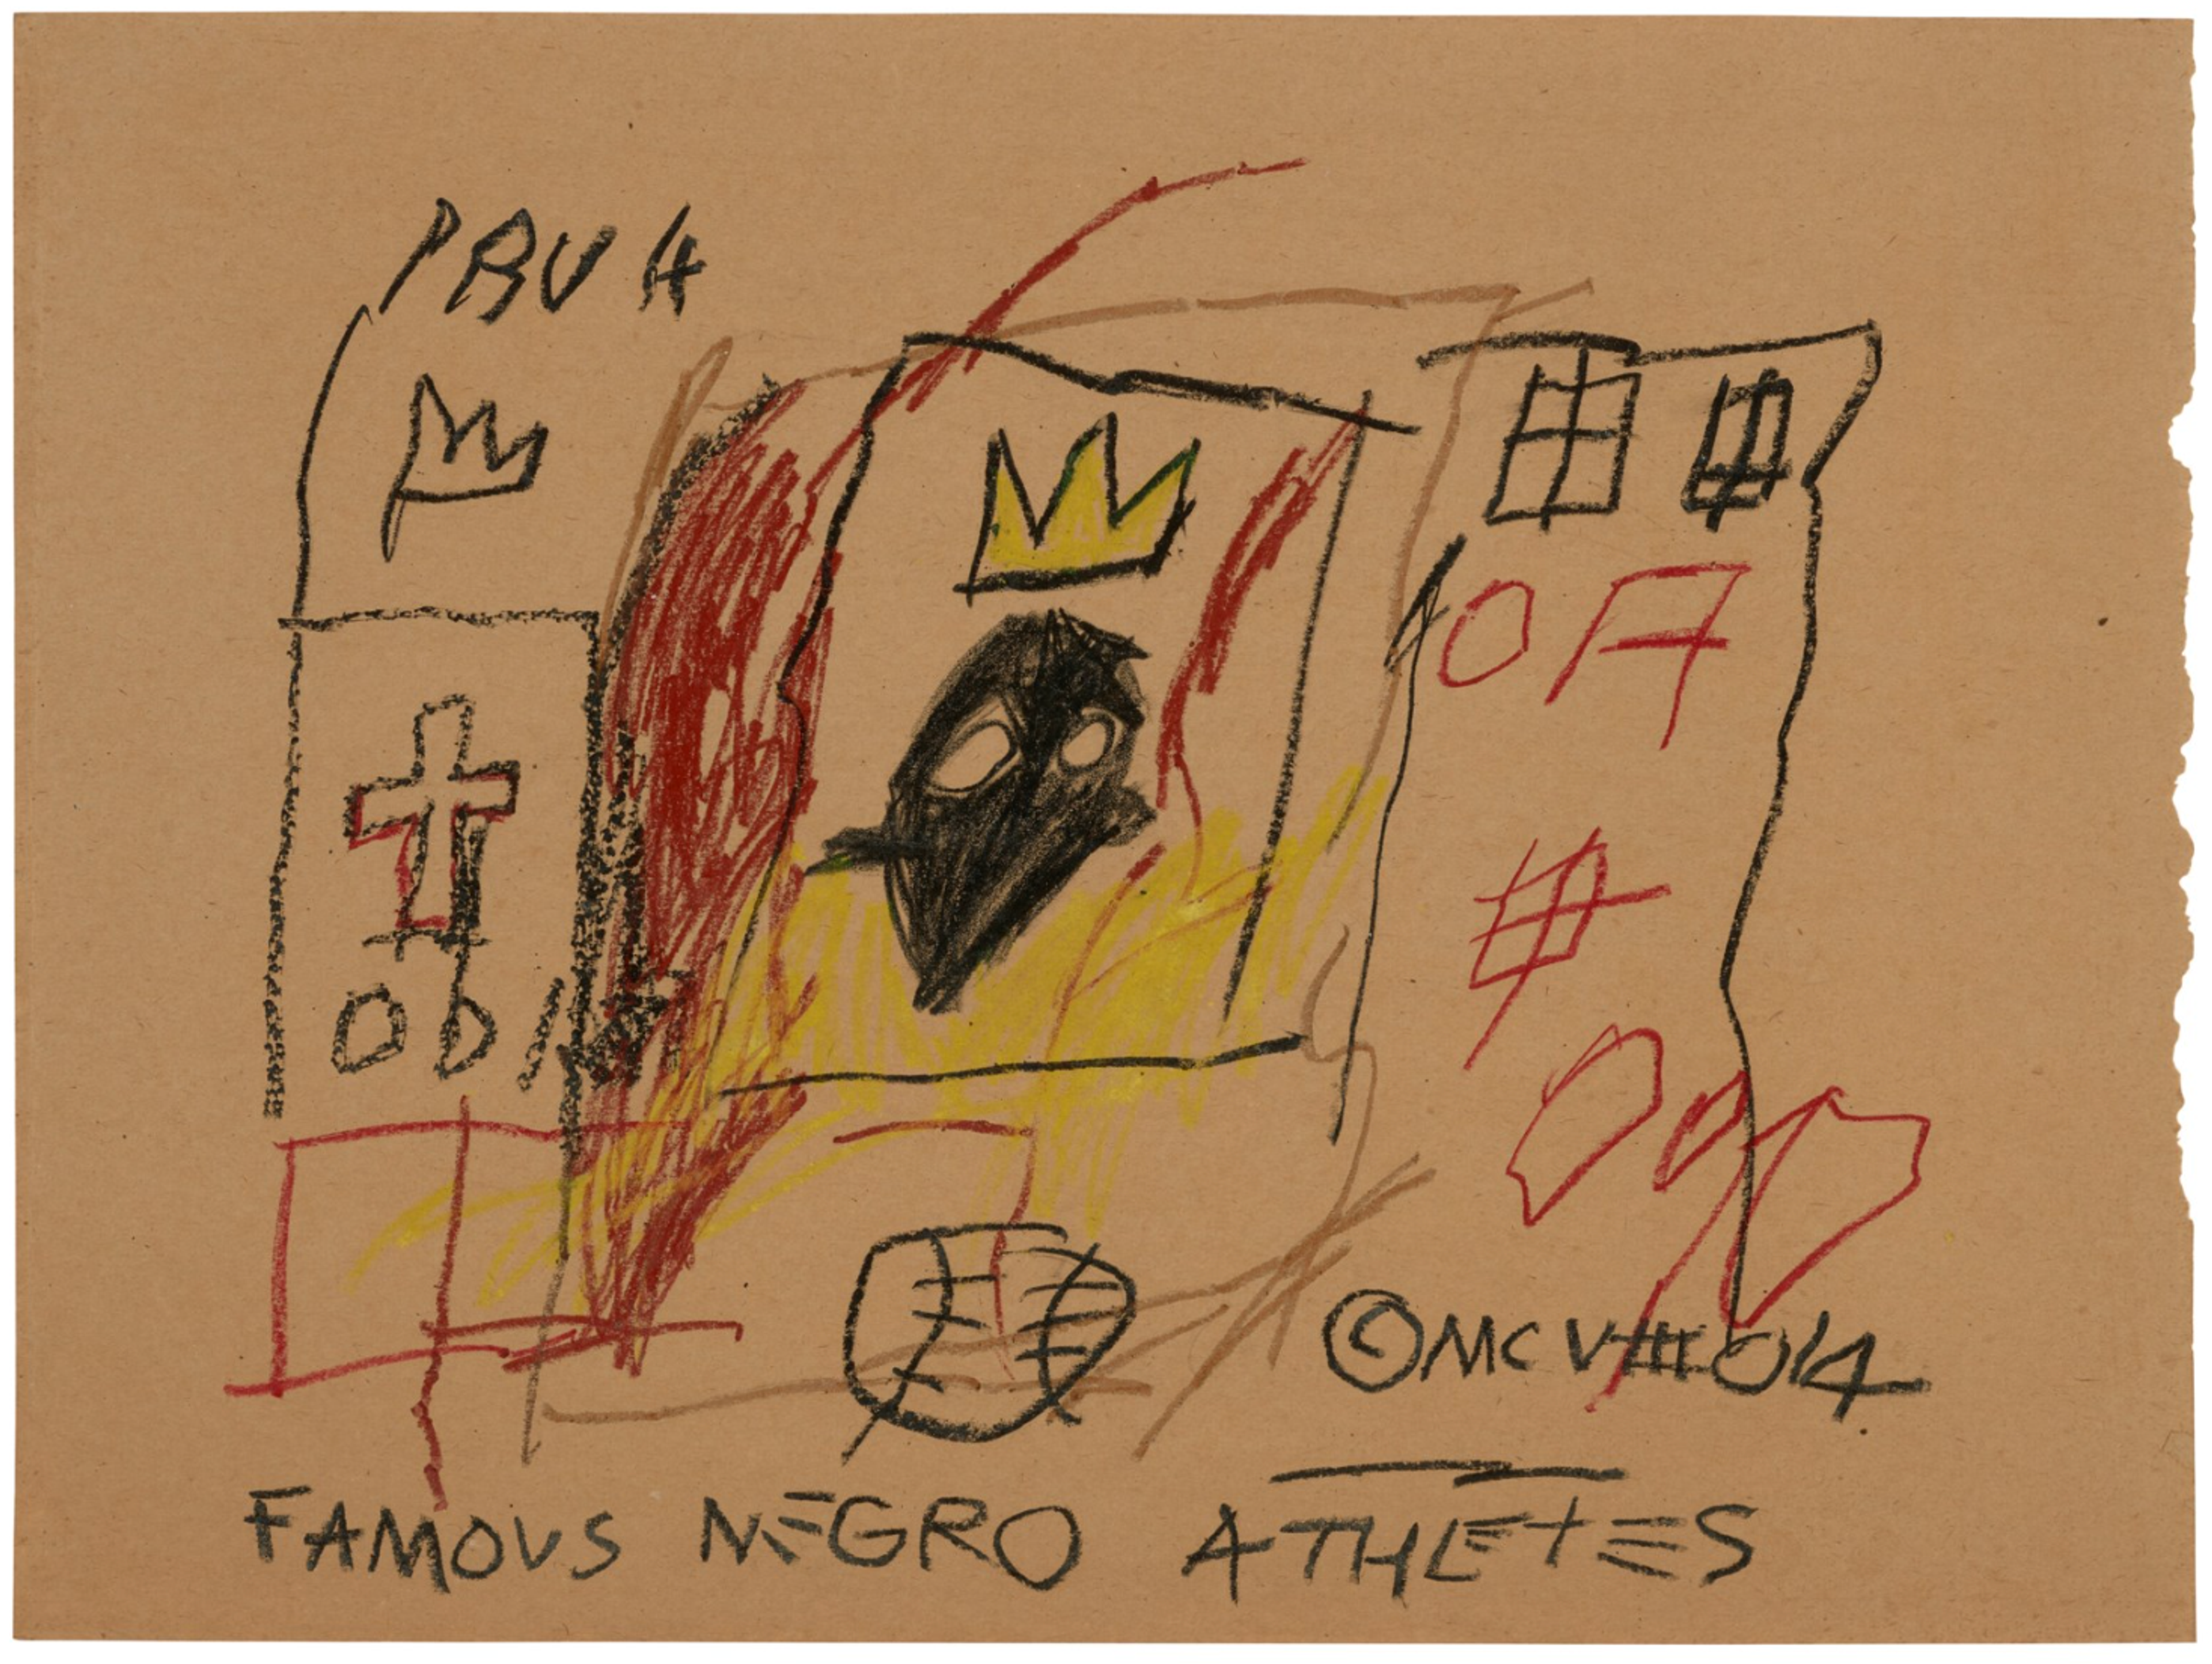  Famous Negro Athletes by Jean-Michel Basquiat 1981